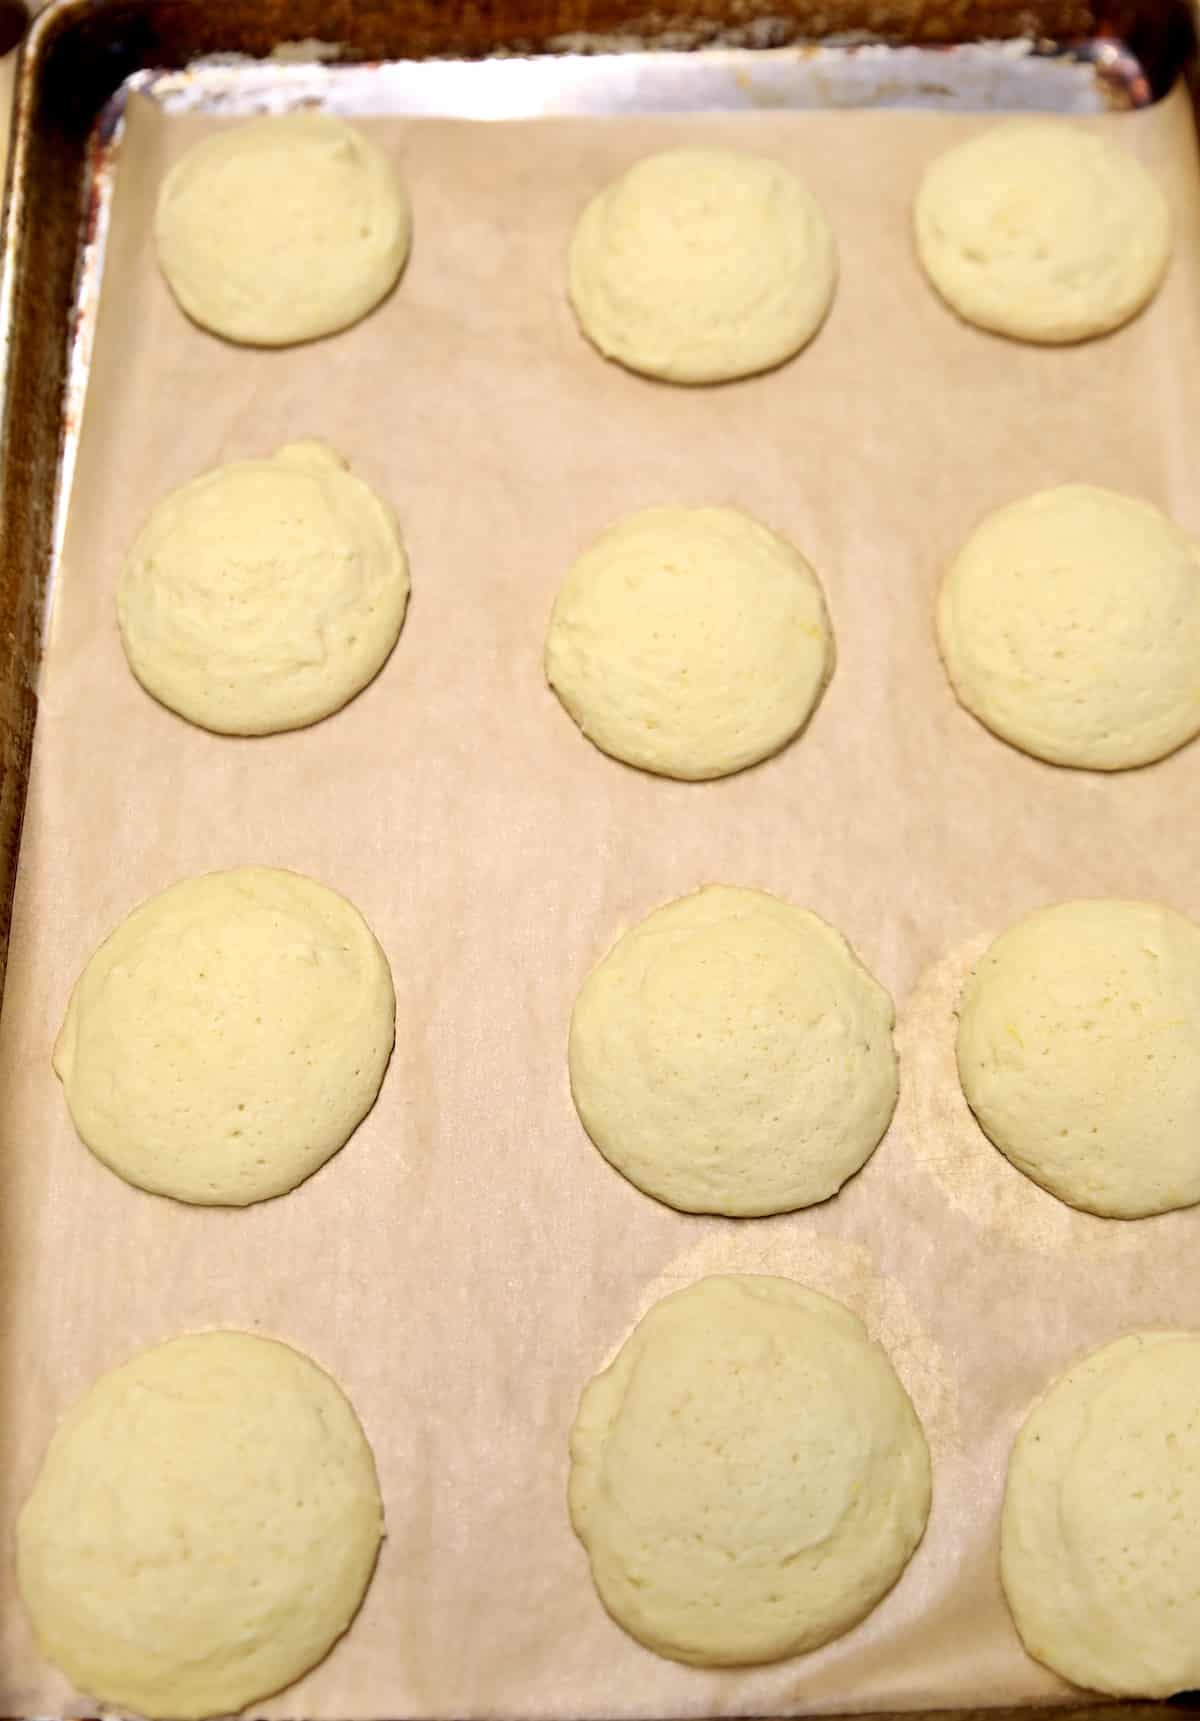 Lemon cookies baked on a baking sheet.